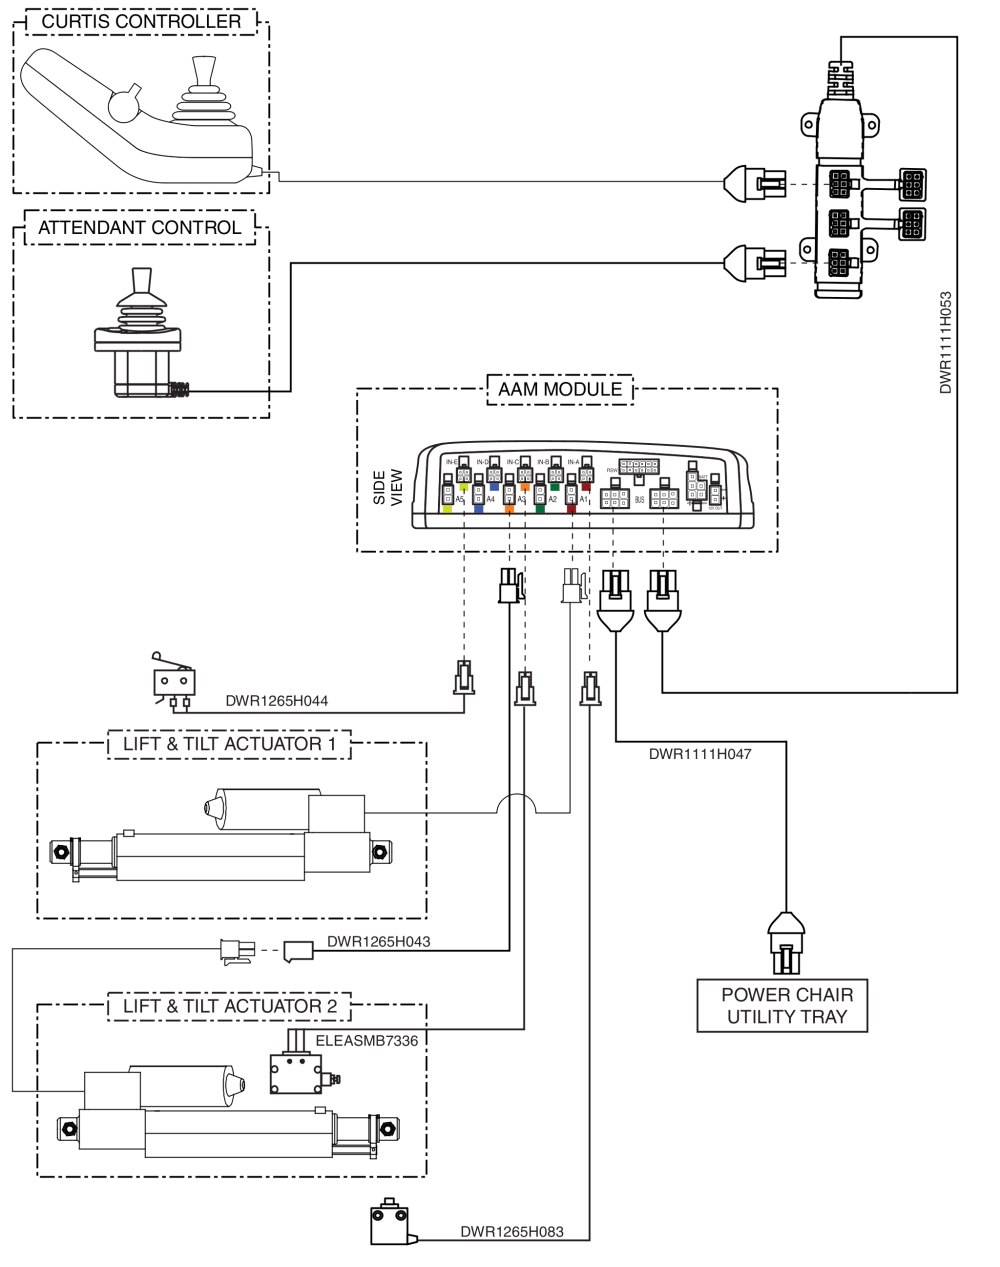 Tb2 Lift And Tilt W/ Attendant Control, Electrical System Diagram parts diagram